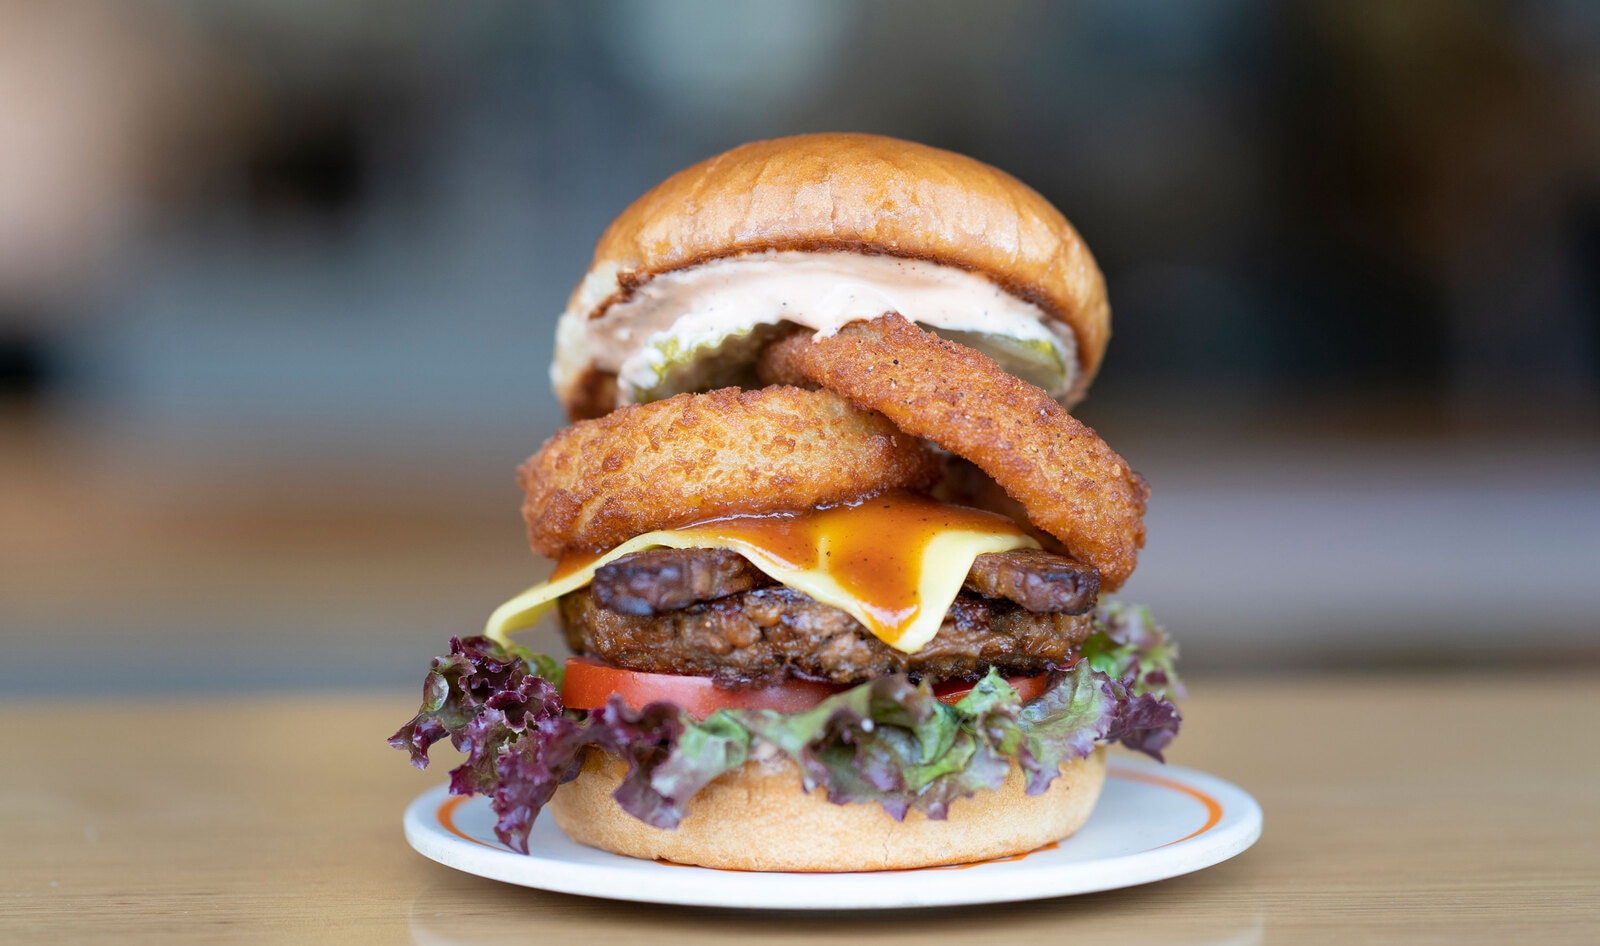 With Plans for 1,000 Vegan Restaurants, Next Level Burger Raises $20 Million